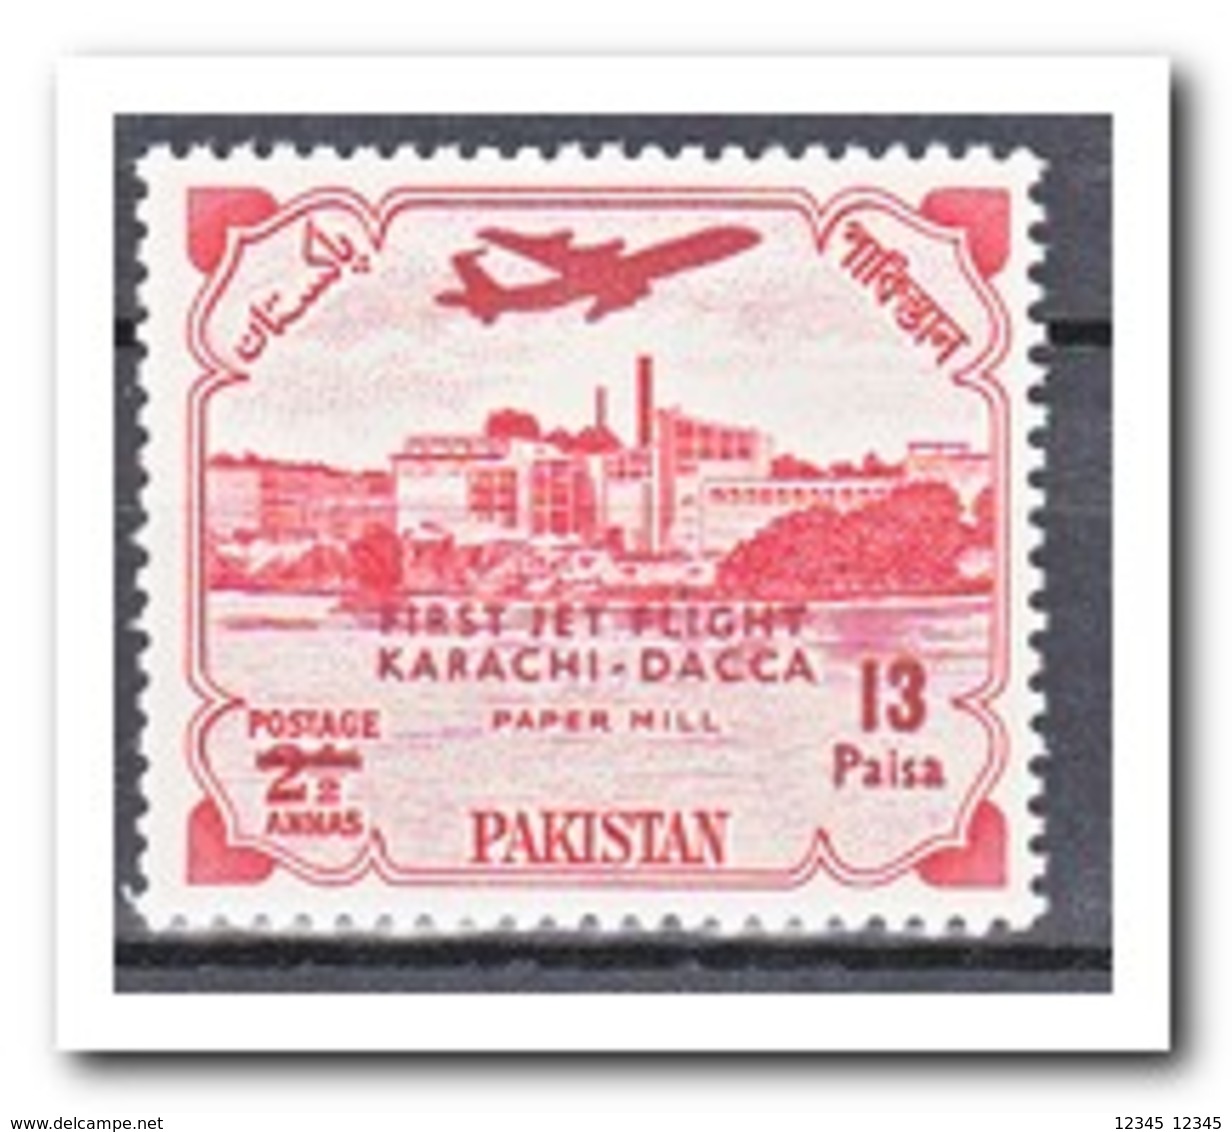 Pakistan 1962, Postfris MNH, Jet Flight Karachi-Dacca - Pakistan